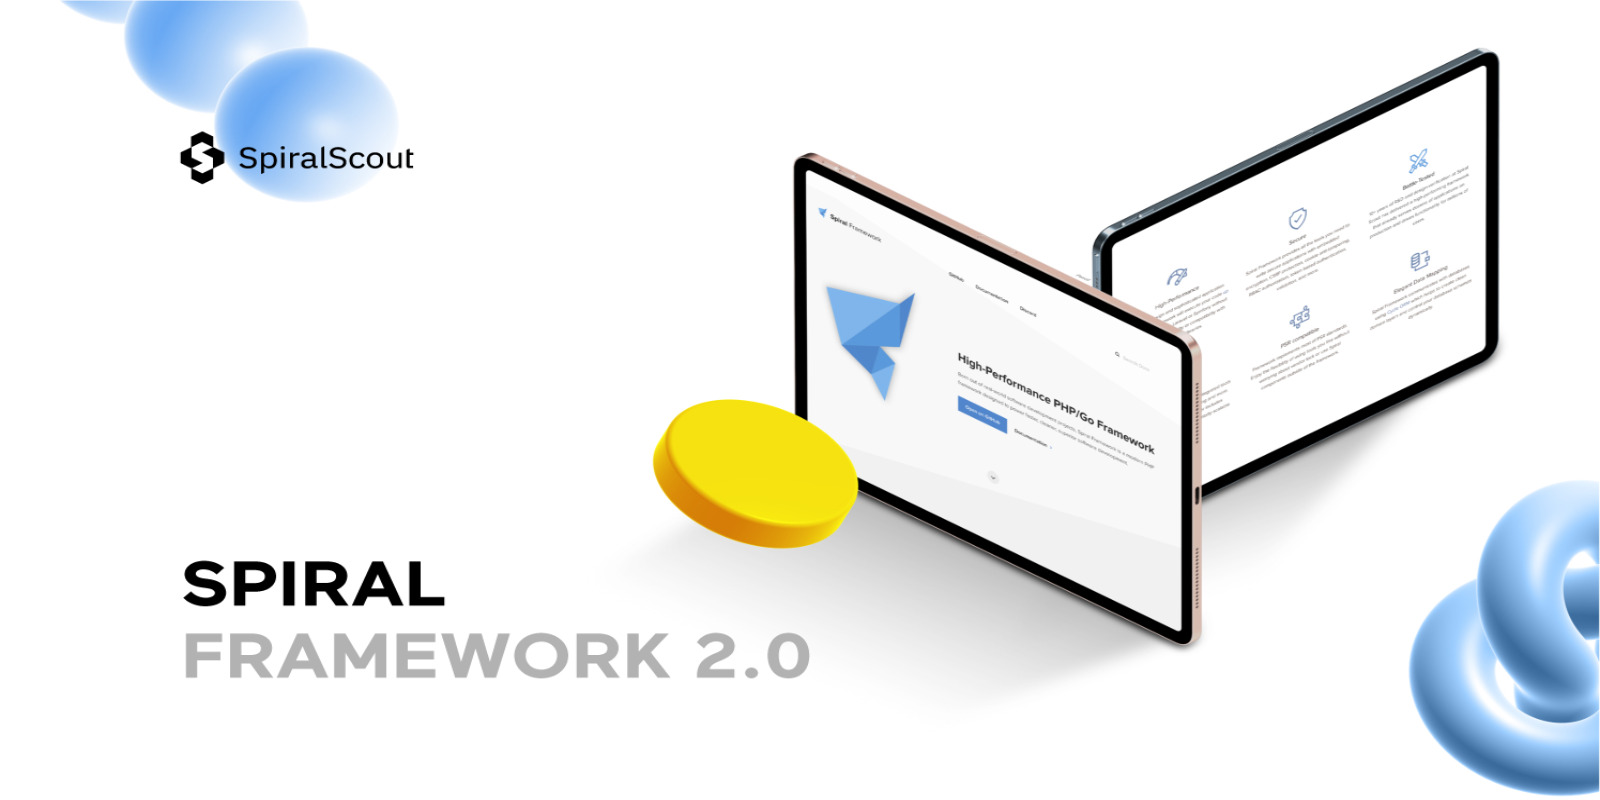 New Release: Spiral Framework 2.0